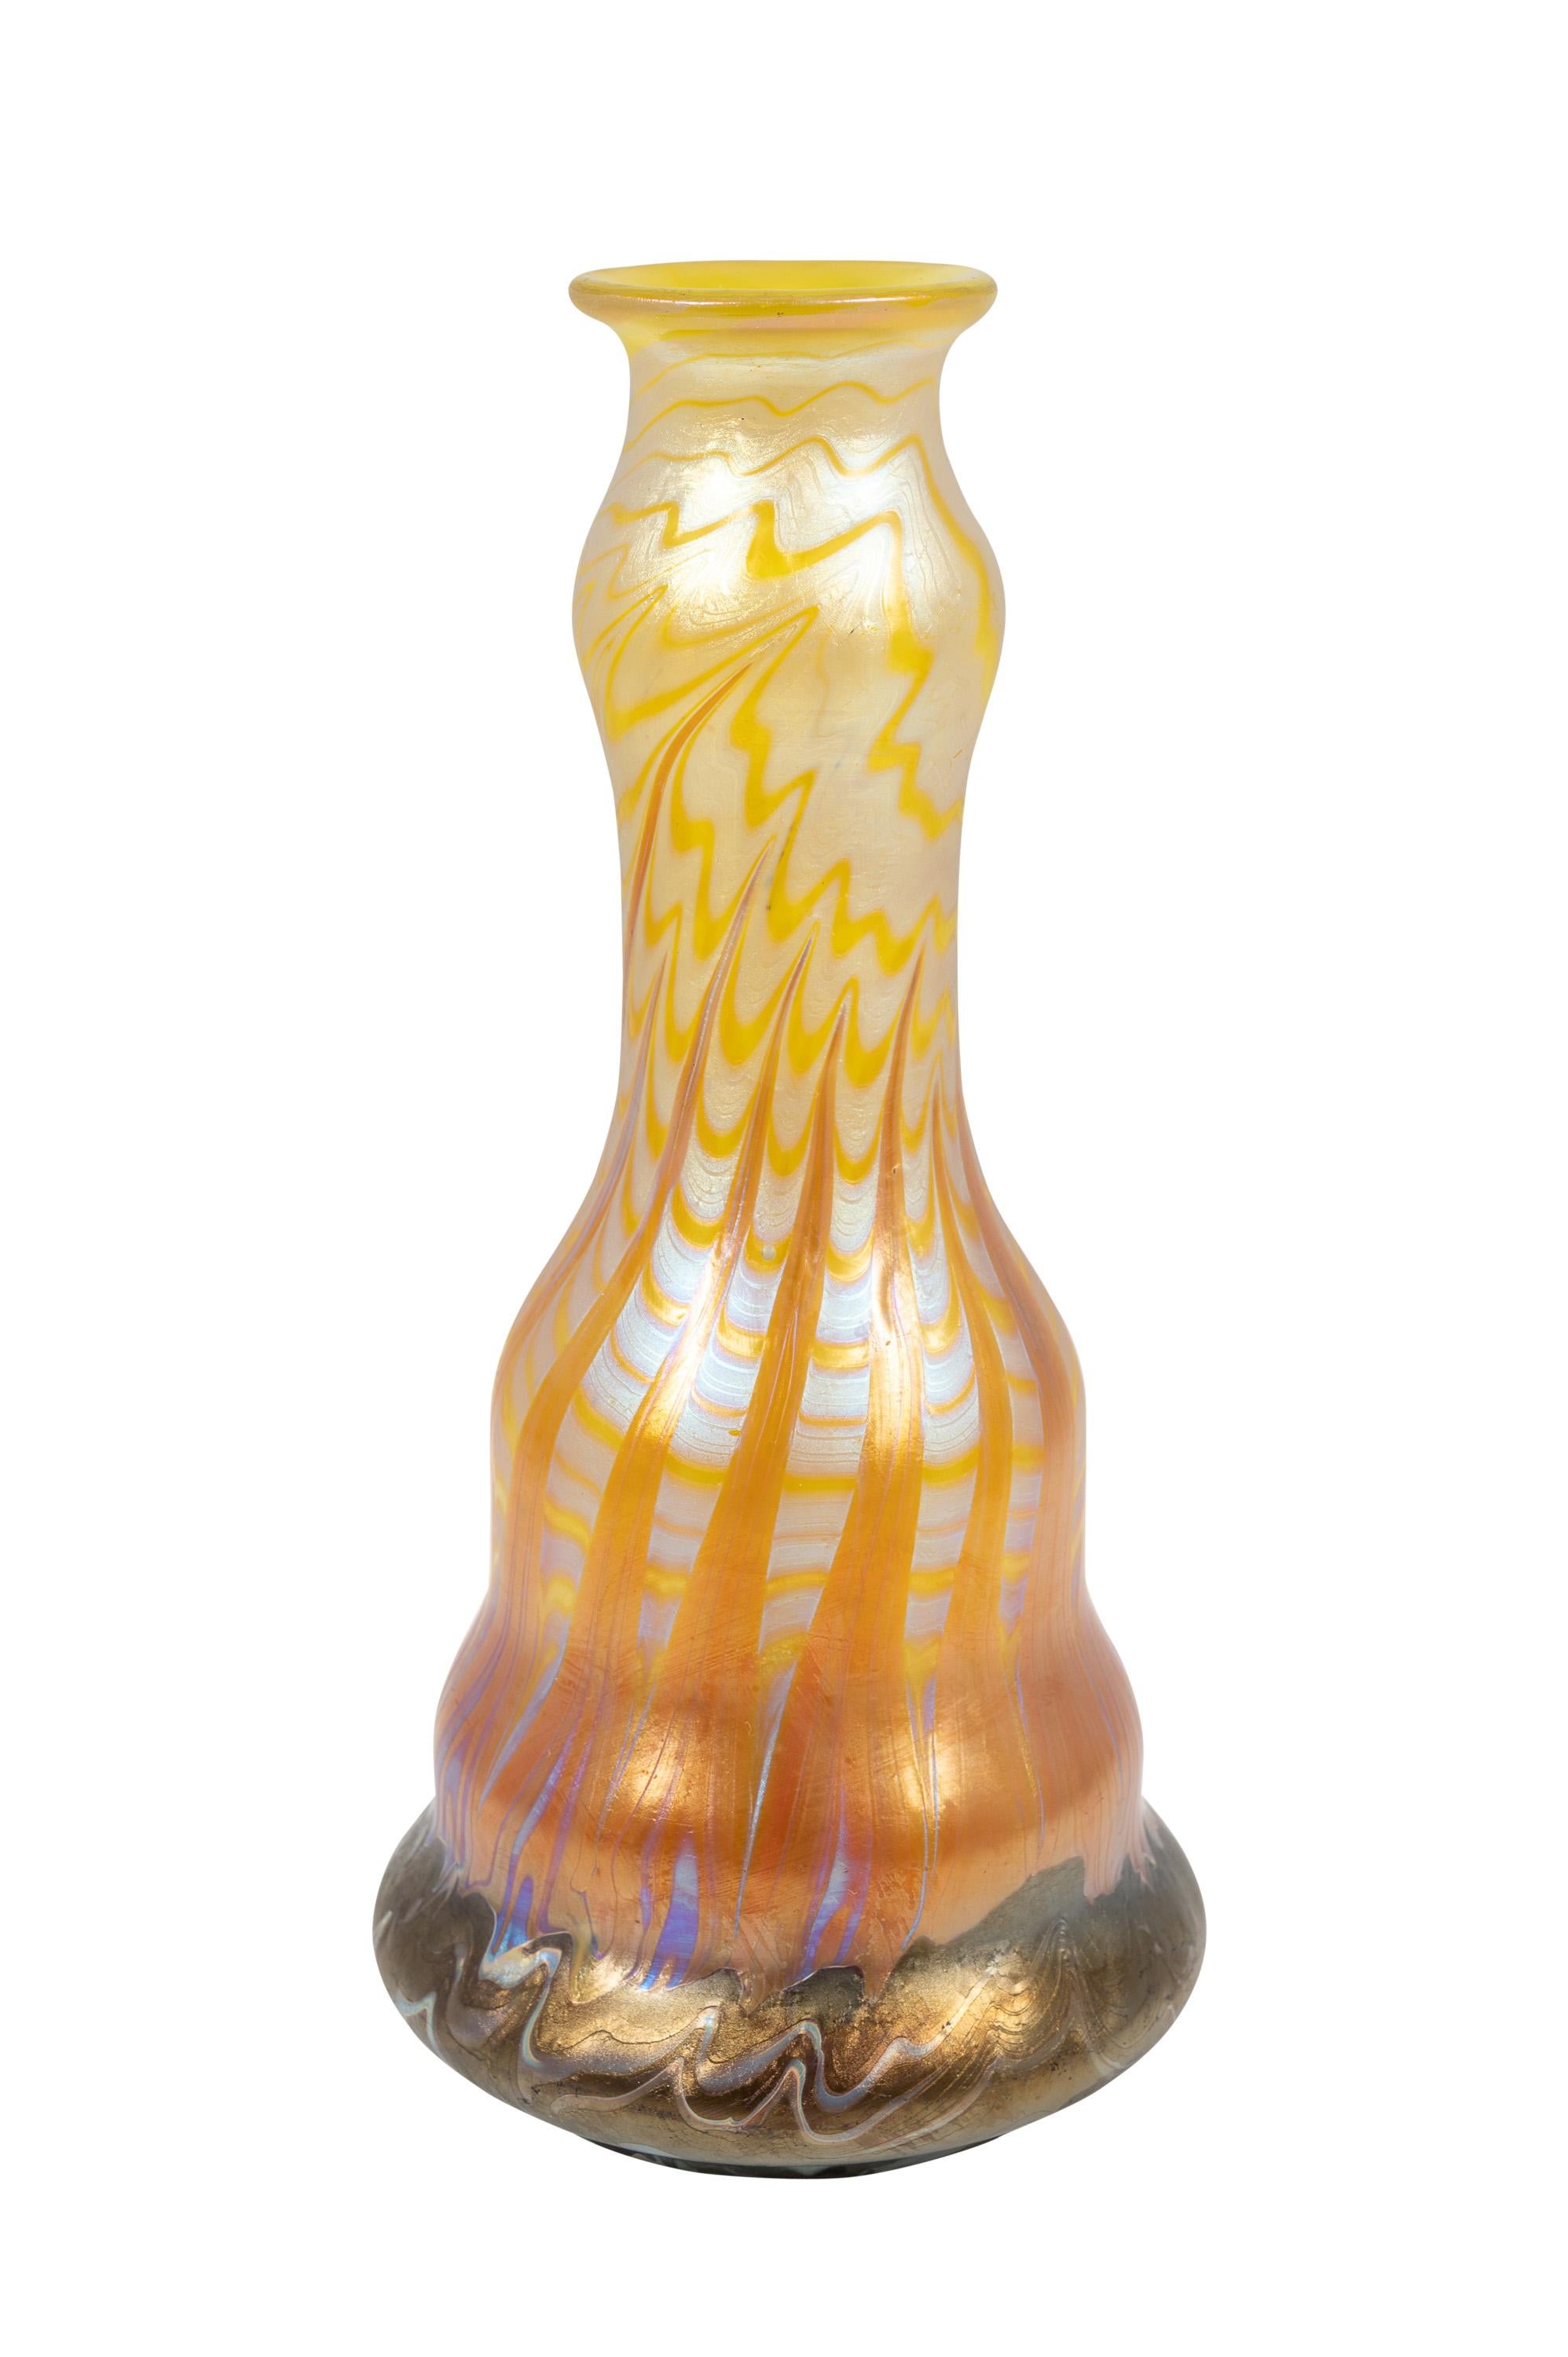 Bohemian glass vase, manufactured by Johann Loetz Witwe, PG 356 decoration, ca. 1900, signed, Paris World Exhibition, yellow, orange, brown, ochre, silver, white, Bohemia, Viennese Art Nouveau, Jugendstil, Art Deco, art glass, iridescent